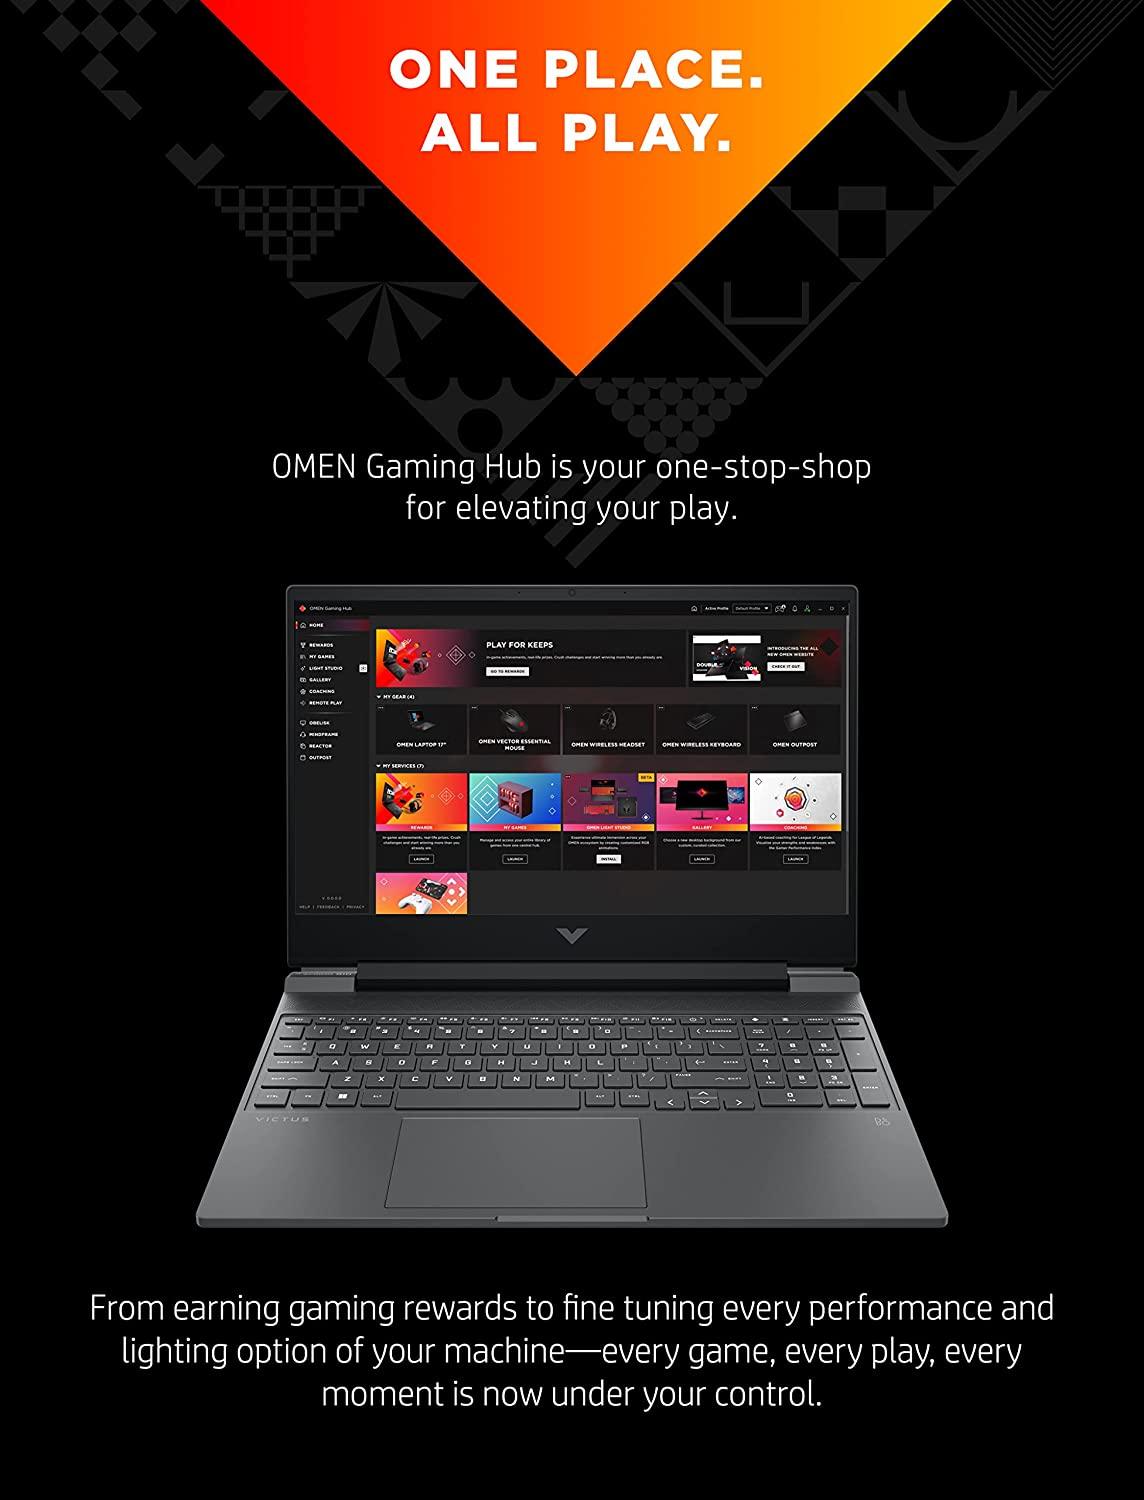 HP Victus 15 Gaming Laptop, NVIDIA GeForce RTX 3050, 12th Gen Intel Core i5-12500H (12-core 20-thread) , 8 GB RAM, 512 GB SSD, 144 hz Full HD Display, Backlit Keyboard, Enhanced Thermals - ALARABIYA COMPUTER